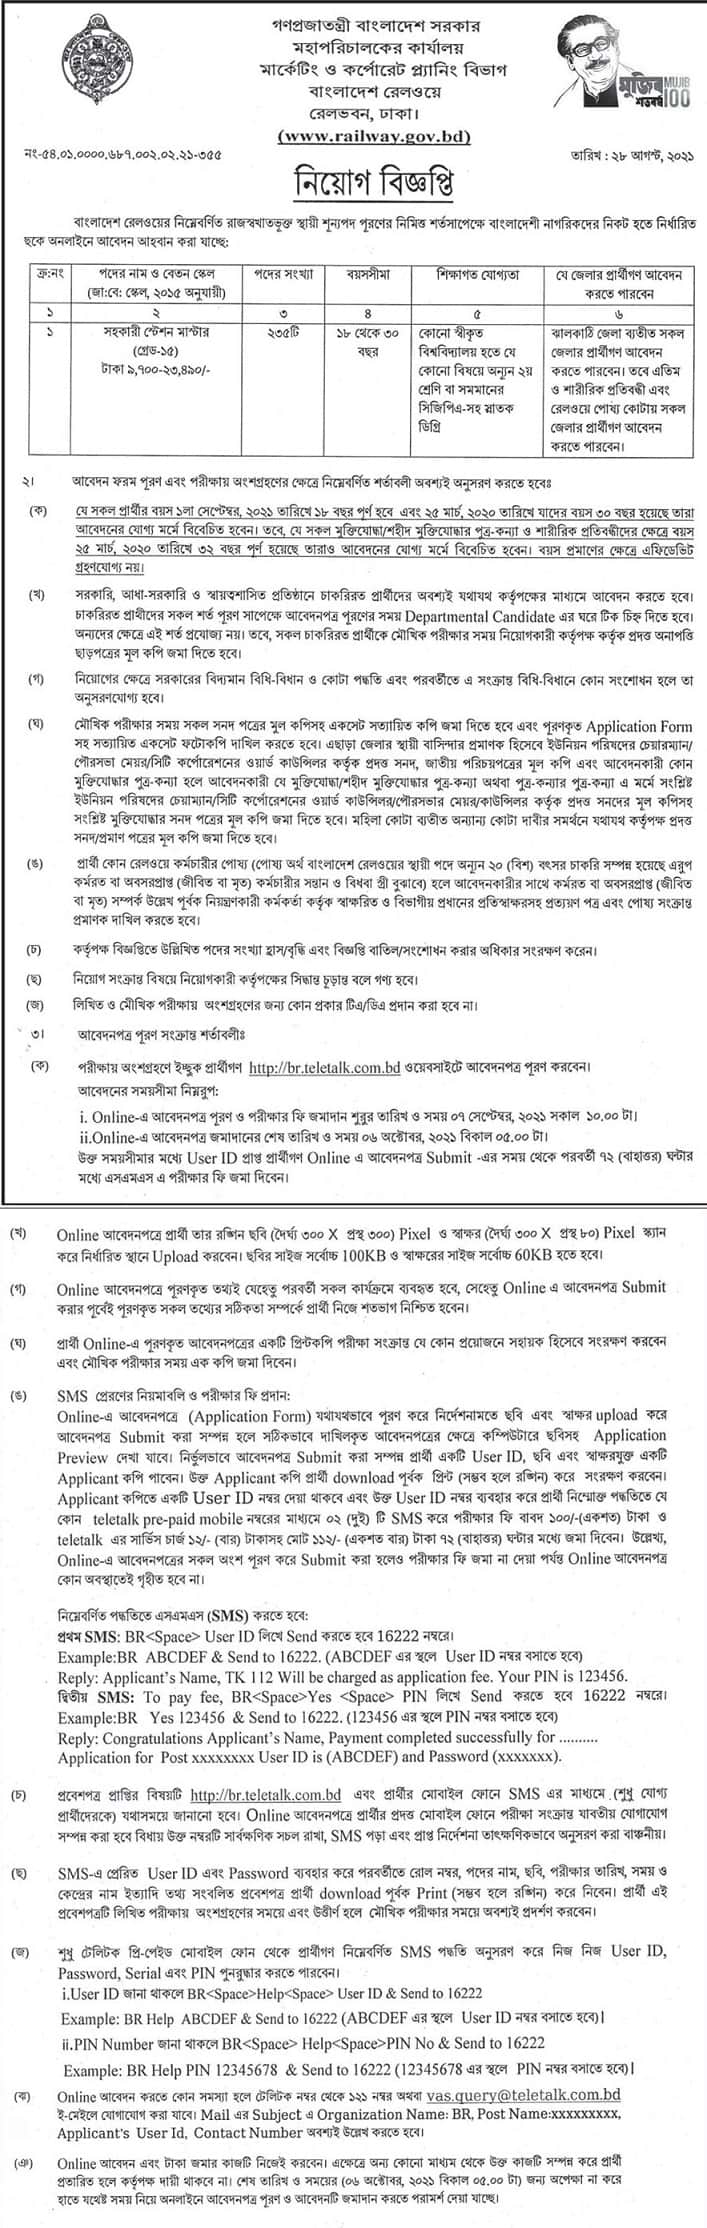 Bangladesh Railway Job circular